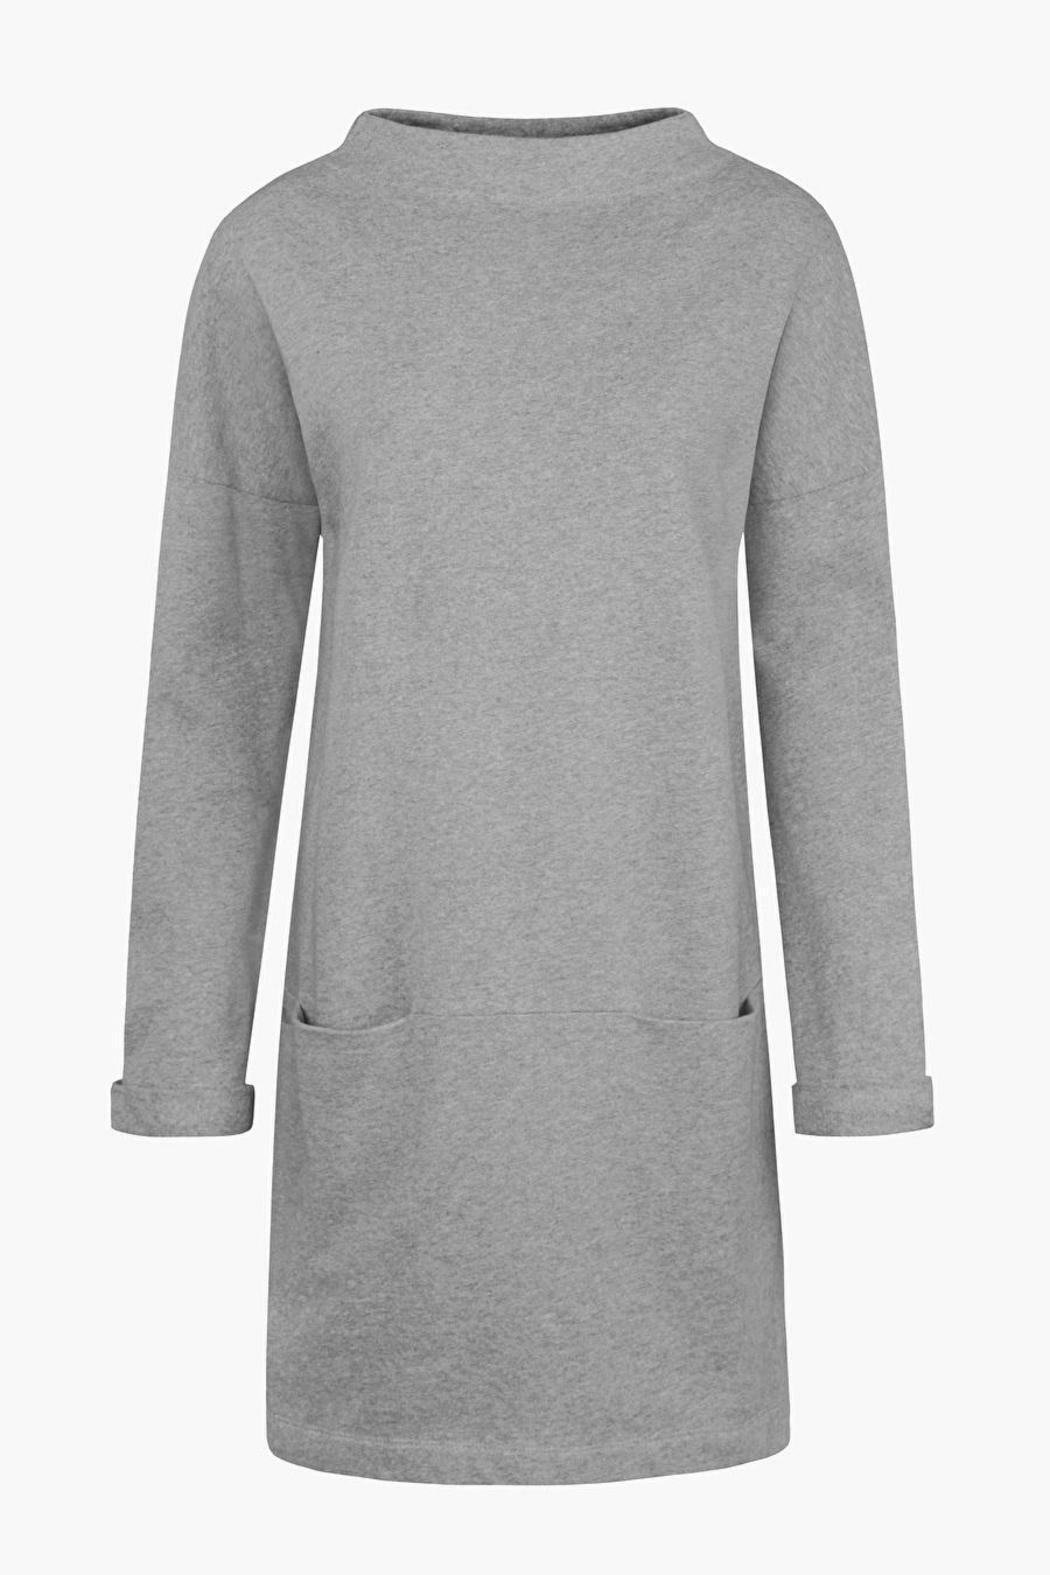 EX Seasalt Thaw Tunic Dress Cobble Organic Cotton Jersey Grey Size 10 RRP £55